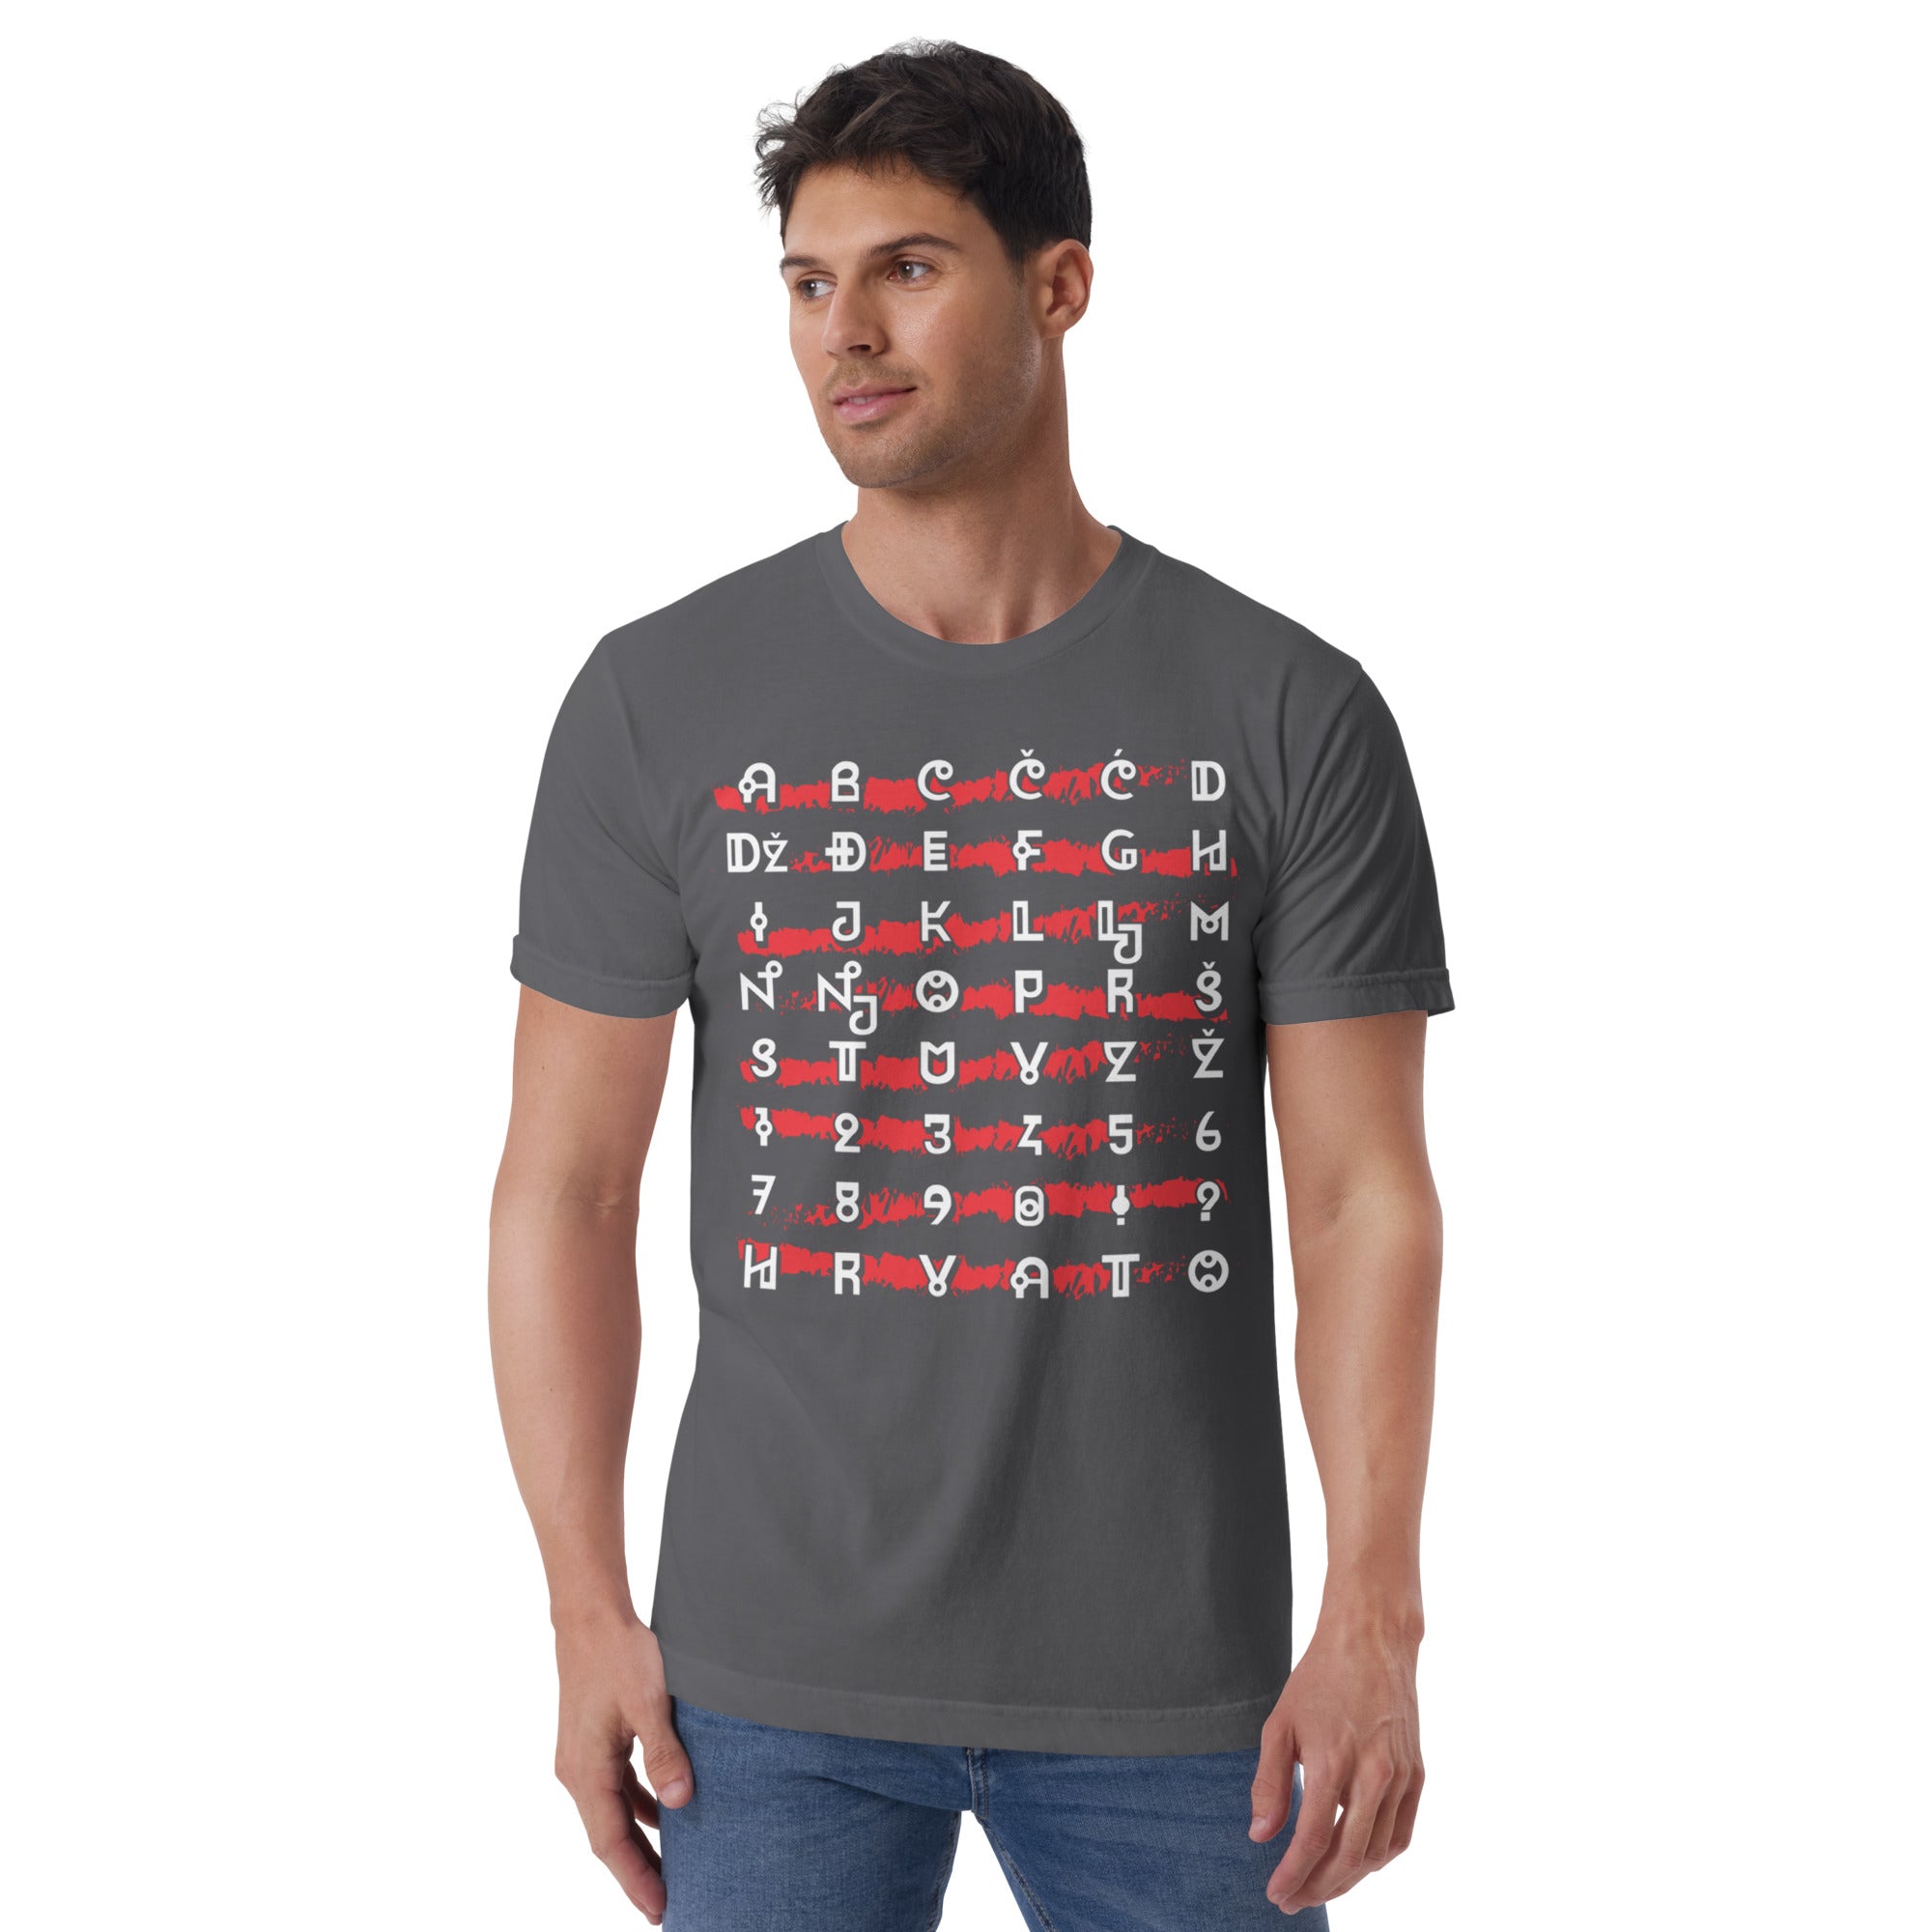 Croatian Alphabet Men's T-Shirt - Learn and Wear Croatian Letters with Pride